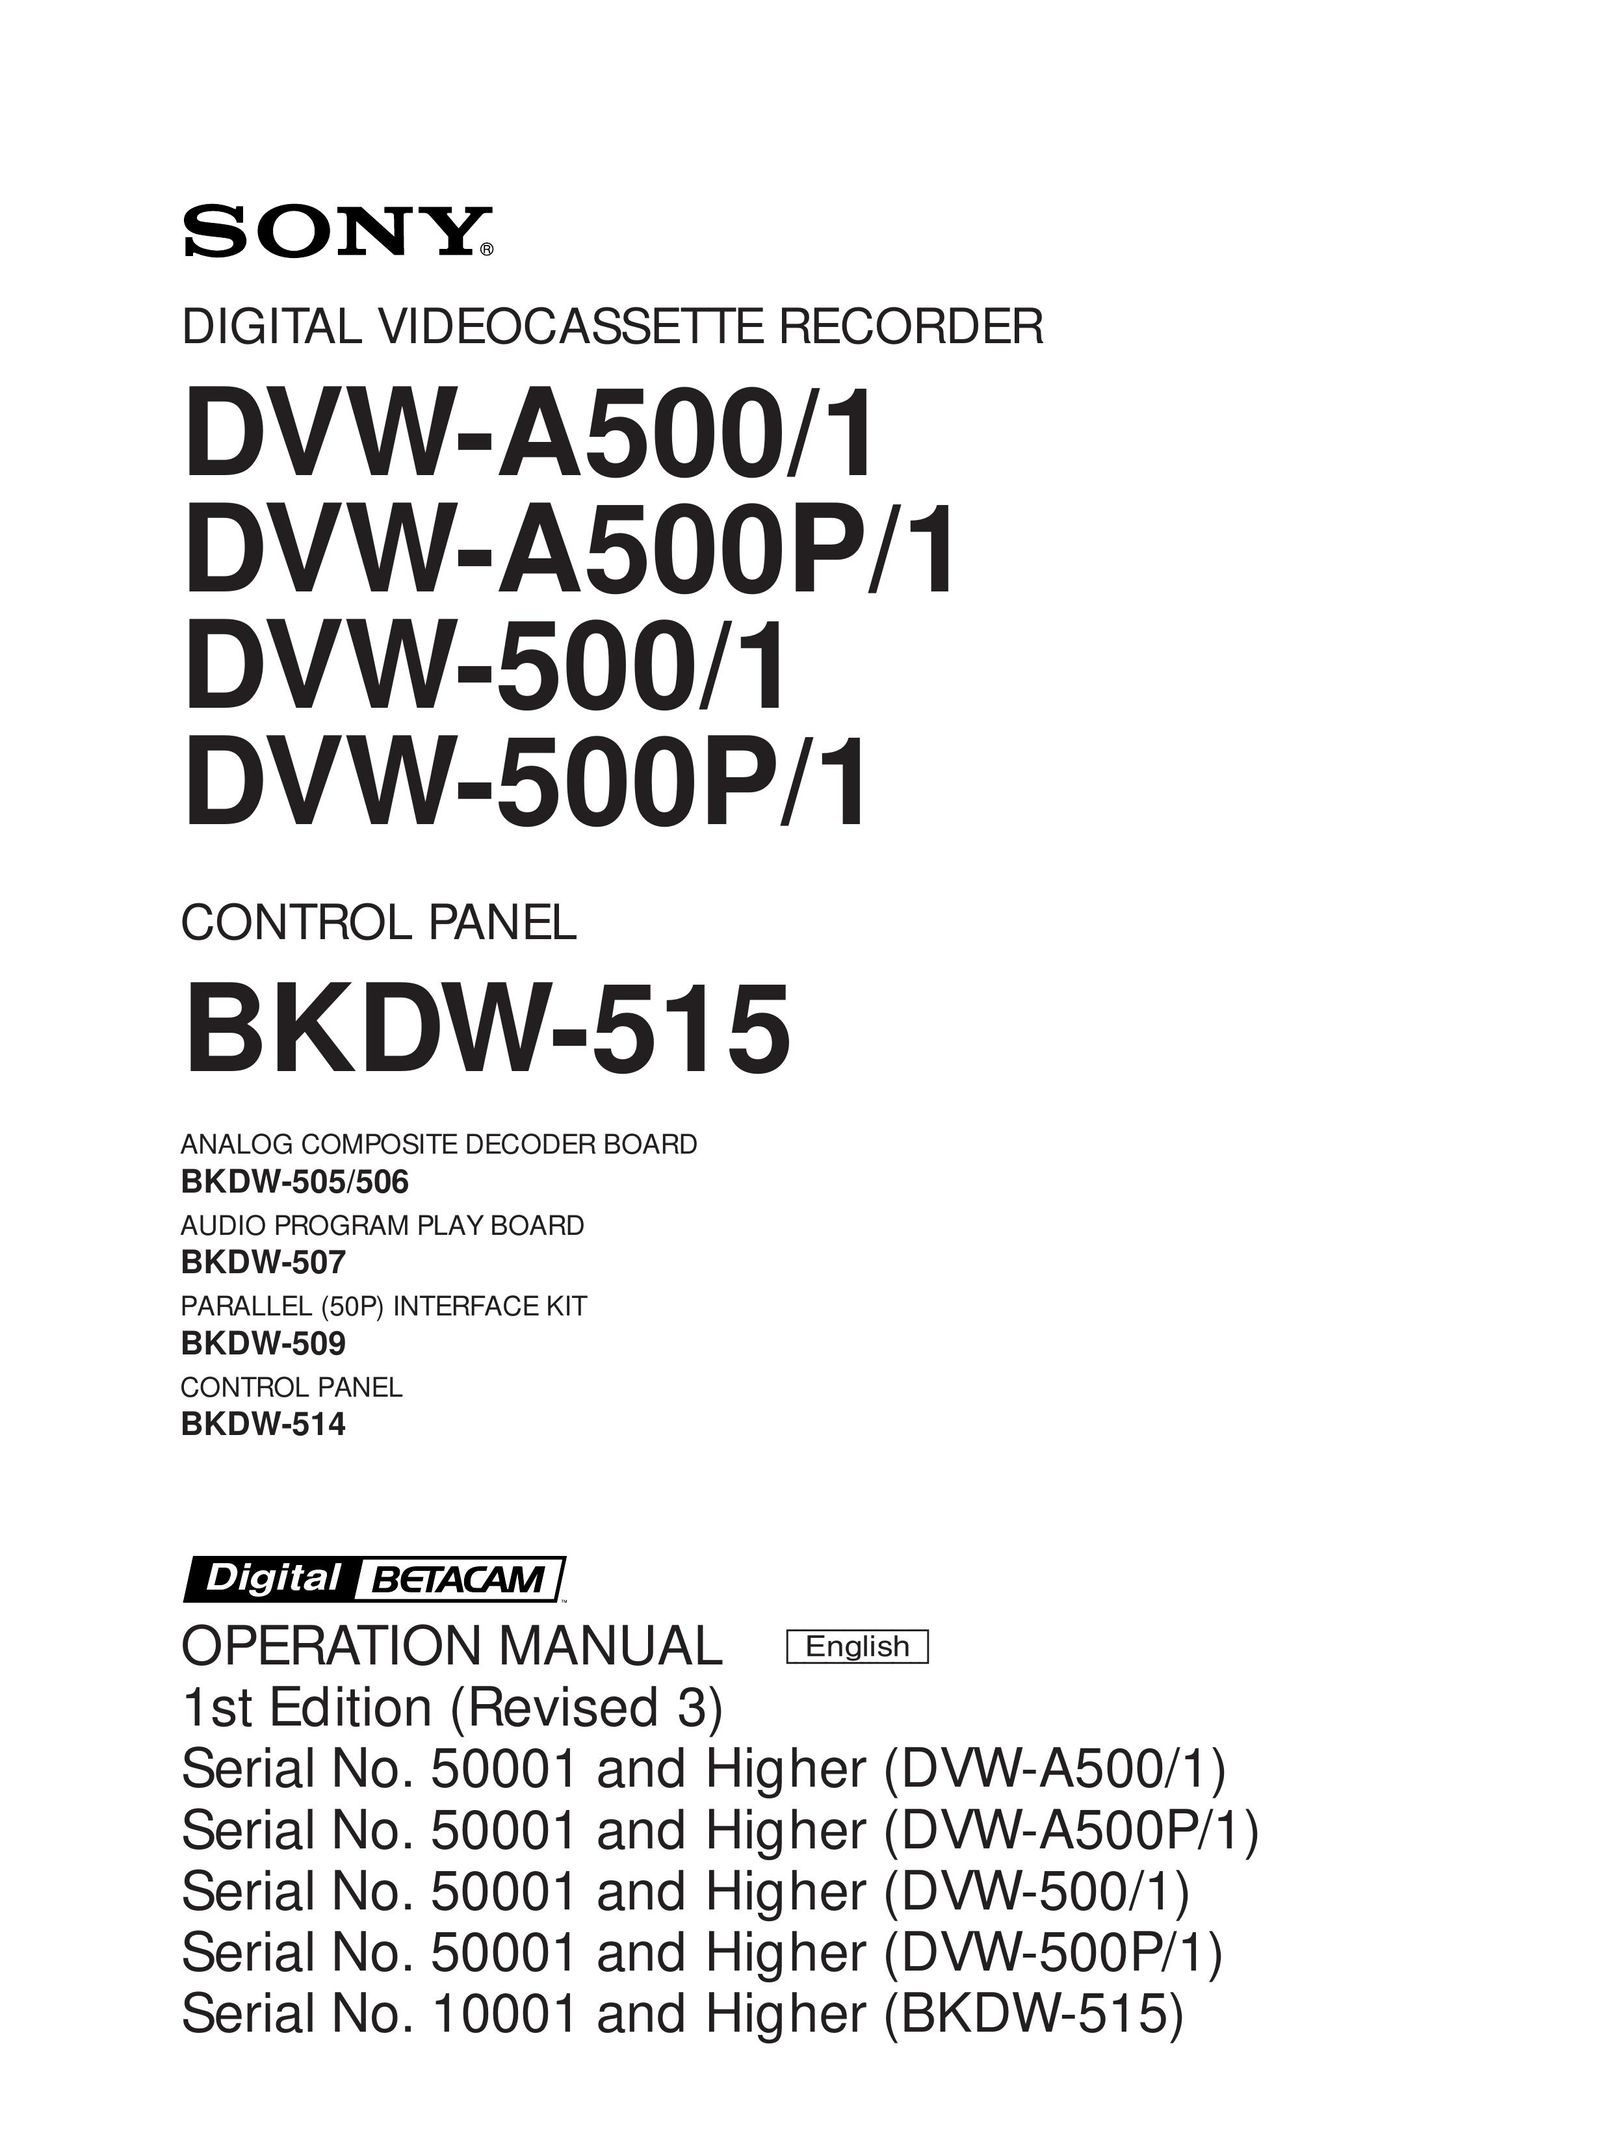 Sony DVW-500P/1 DVR User Manual